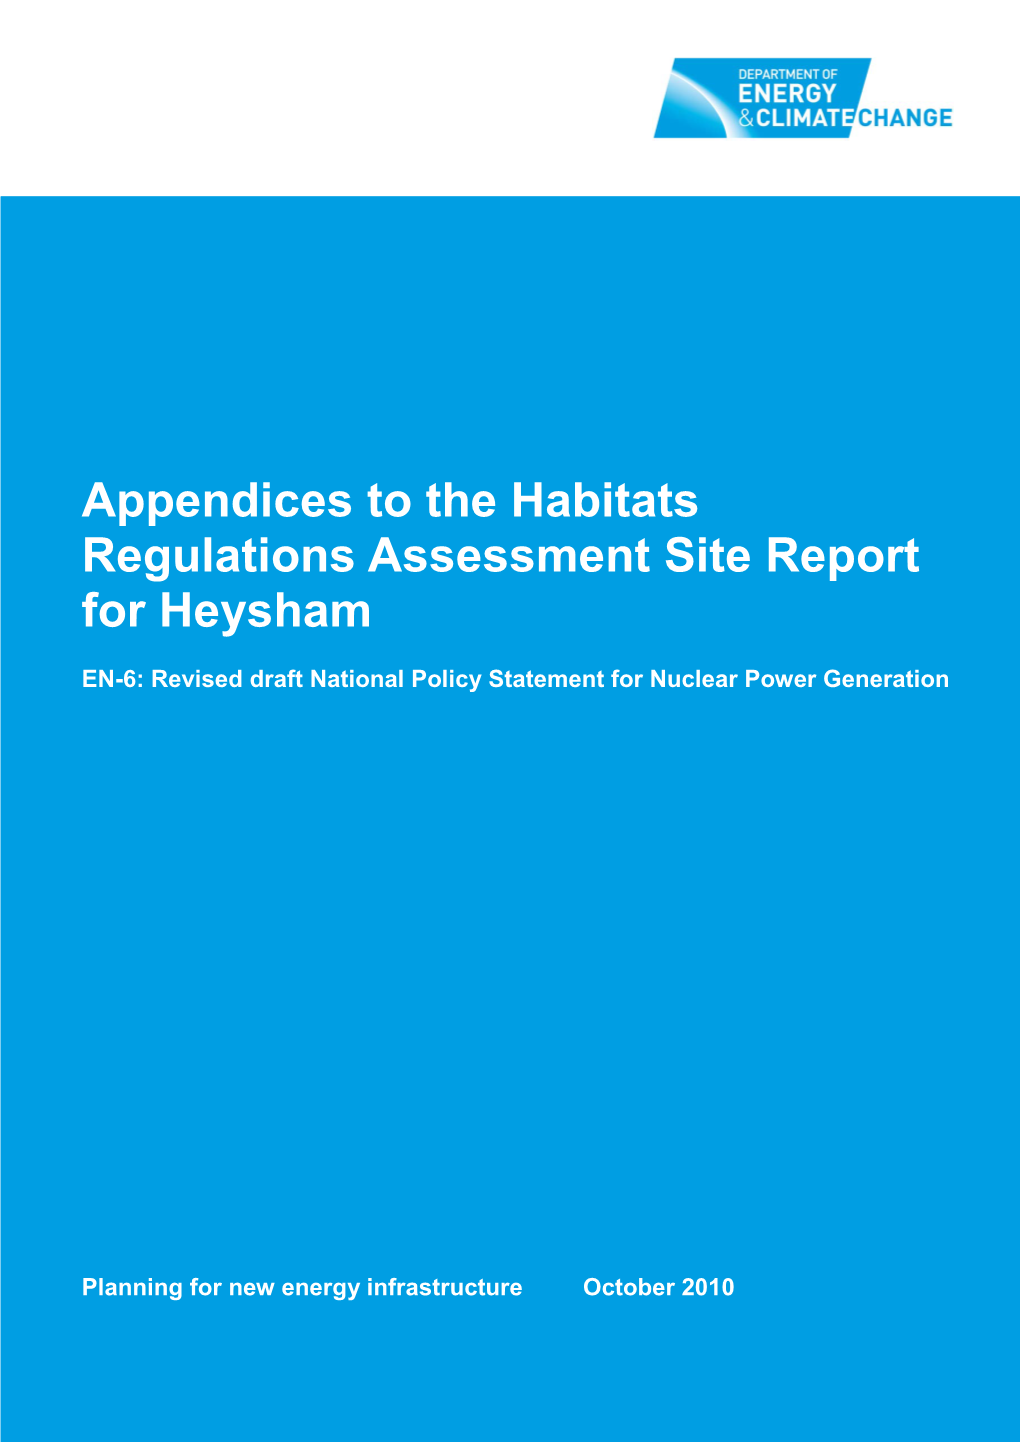 Appendices to the Habitats Regulations Assessment Site Report for Heysham